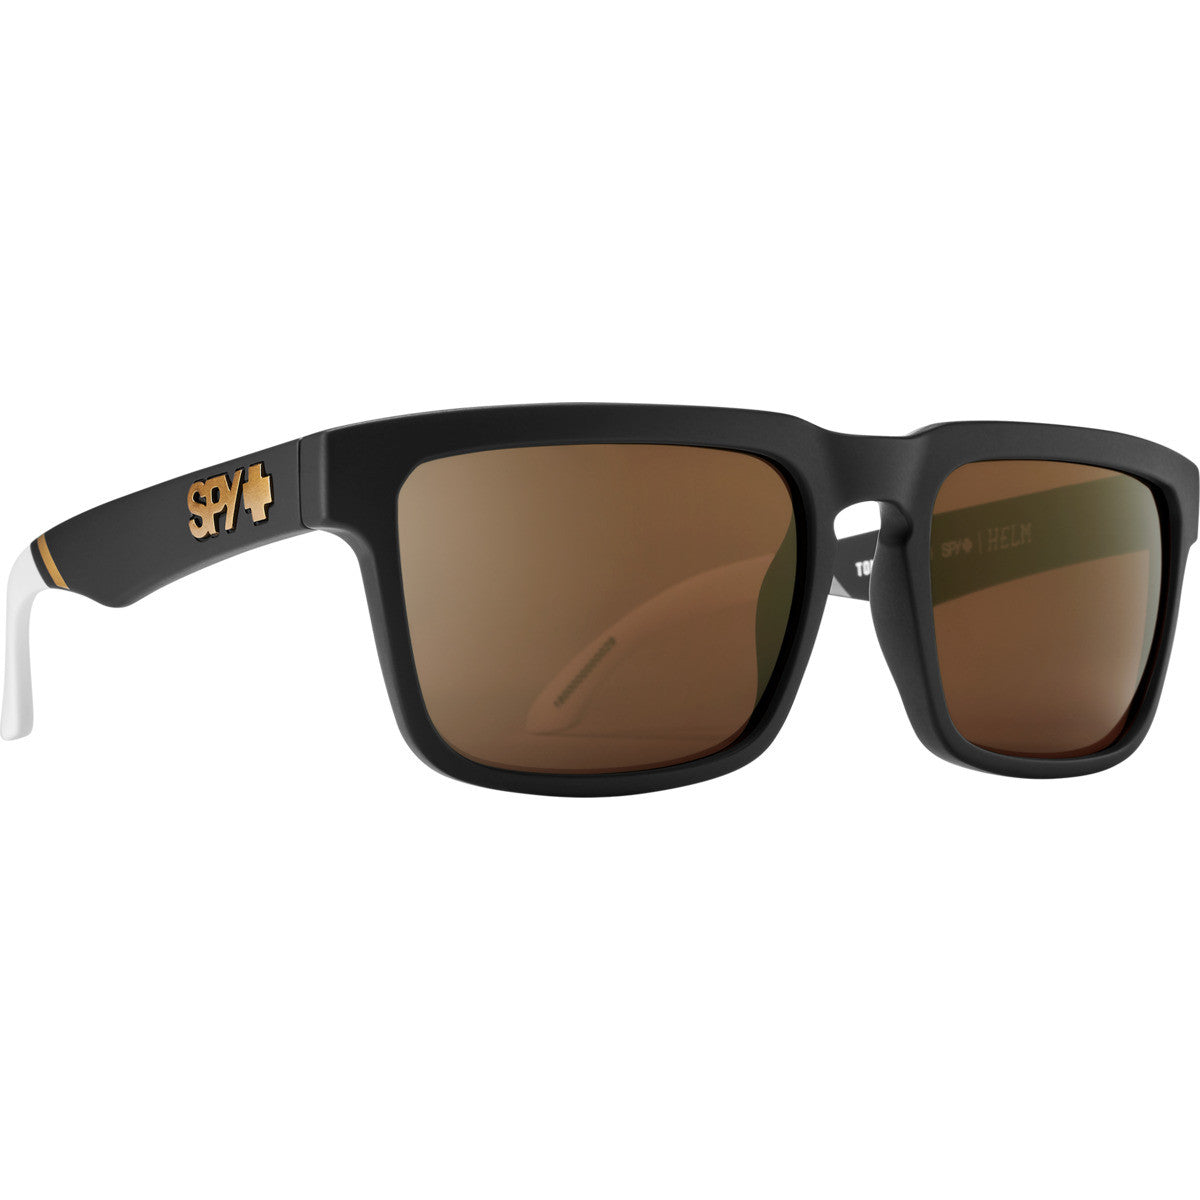 Spy Helm Sunglasses  Spy + Tom Wallisch Matte Black Medium-Large M-L 54-61